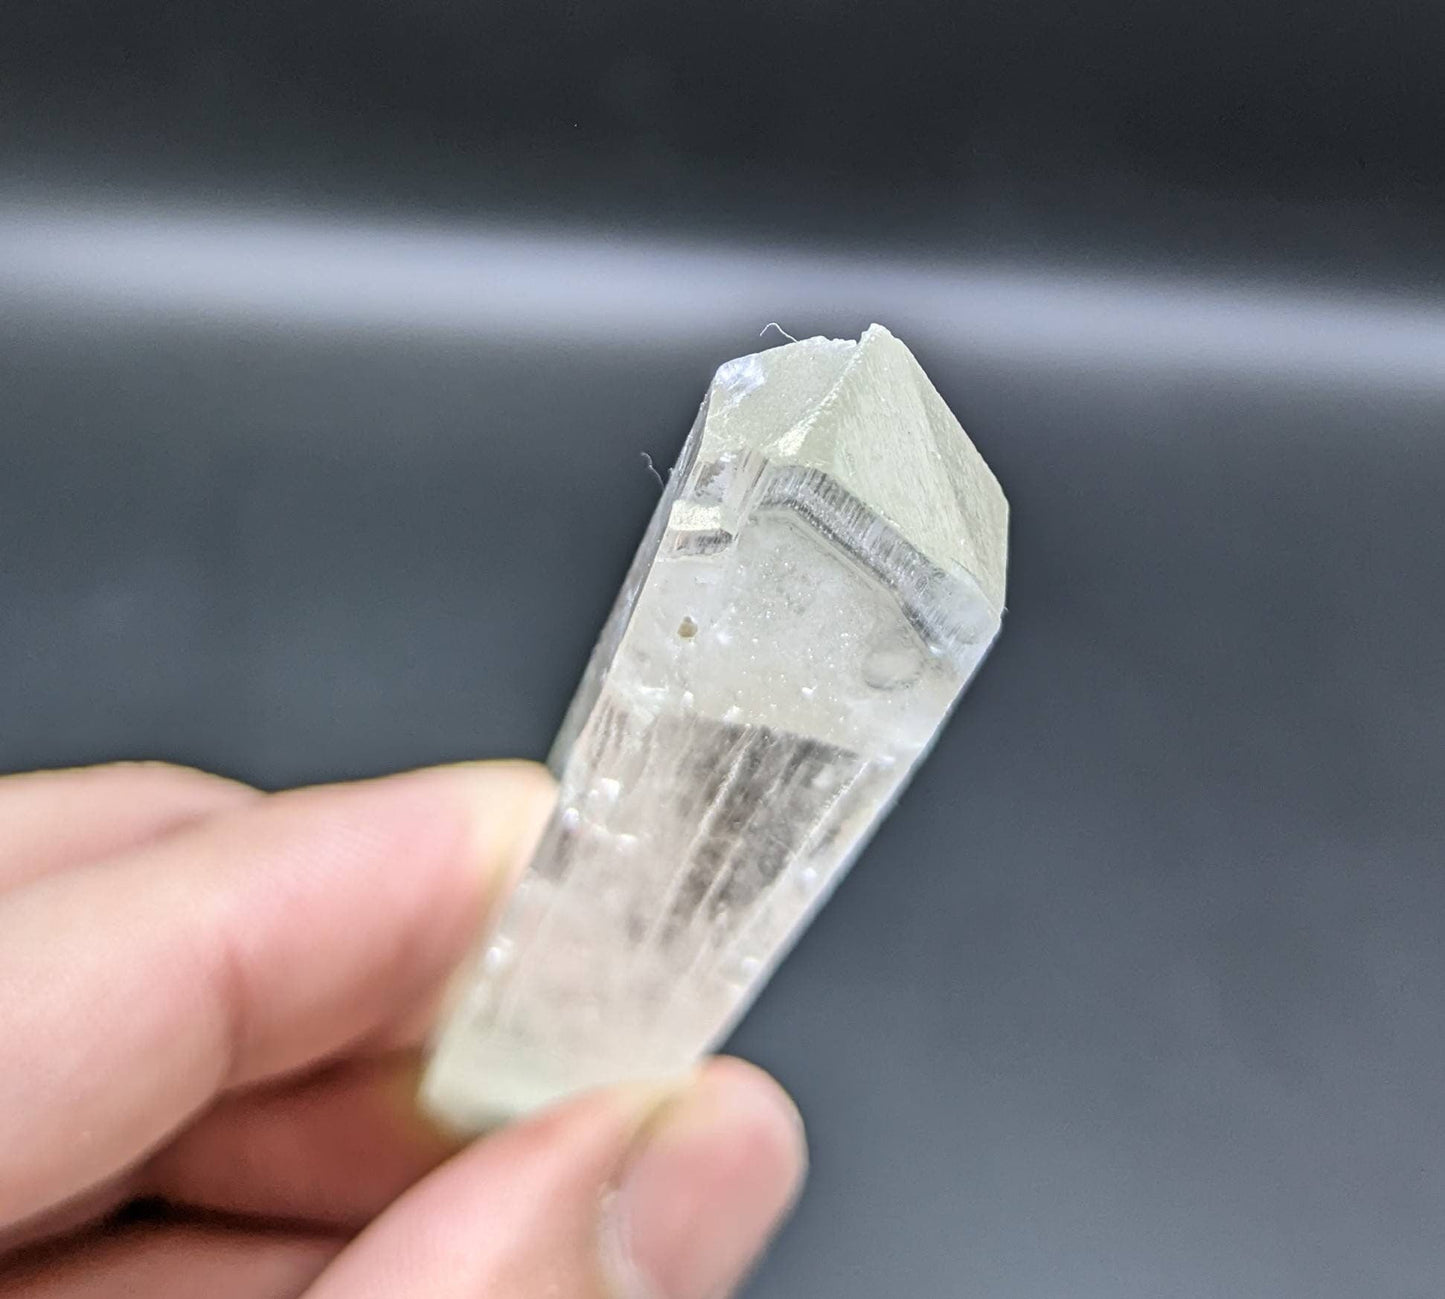 ARSAA GEMS AND MINERALSSpodumene var kunzite crystal clear gem quality lustrous from Laghman, Afghanistan, 30 grams - Premium  from ARSAA GEMS AND MINERALS - Just $100.00! Shop now at ARSAA GEMS AND MINERALS